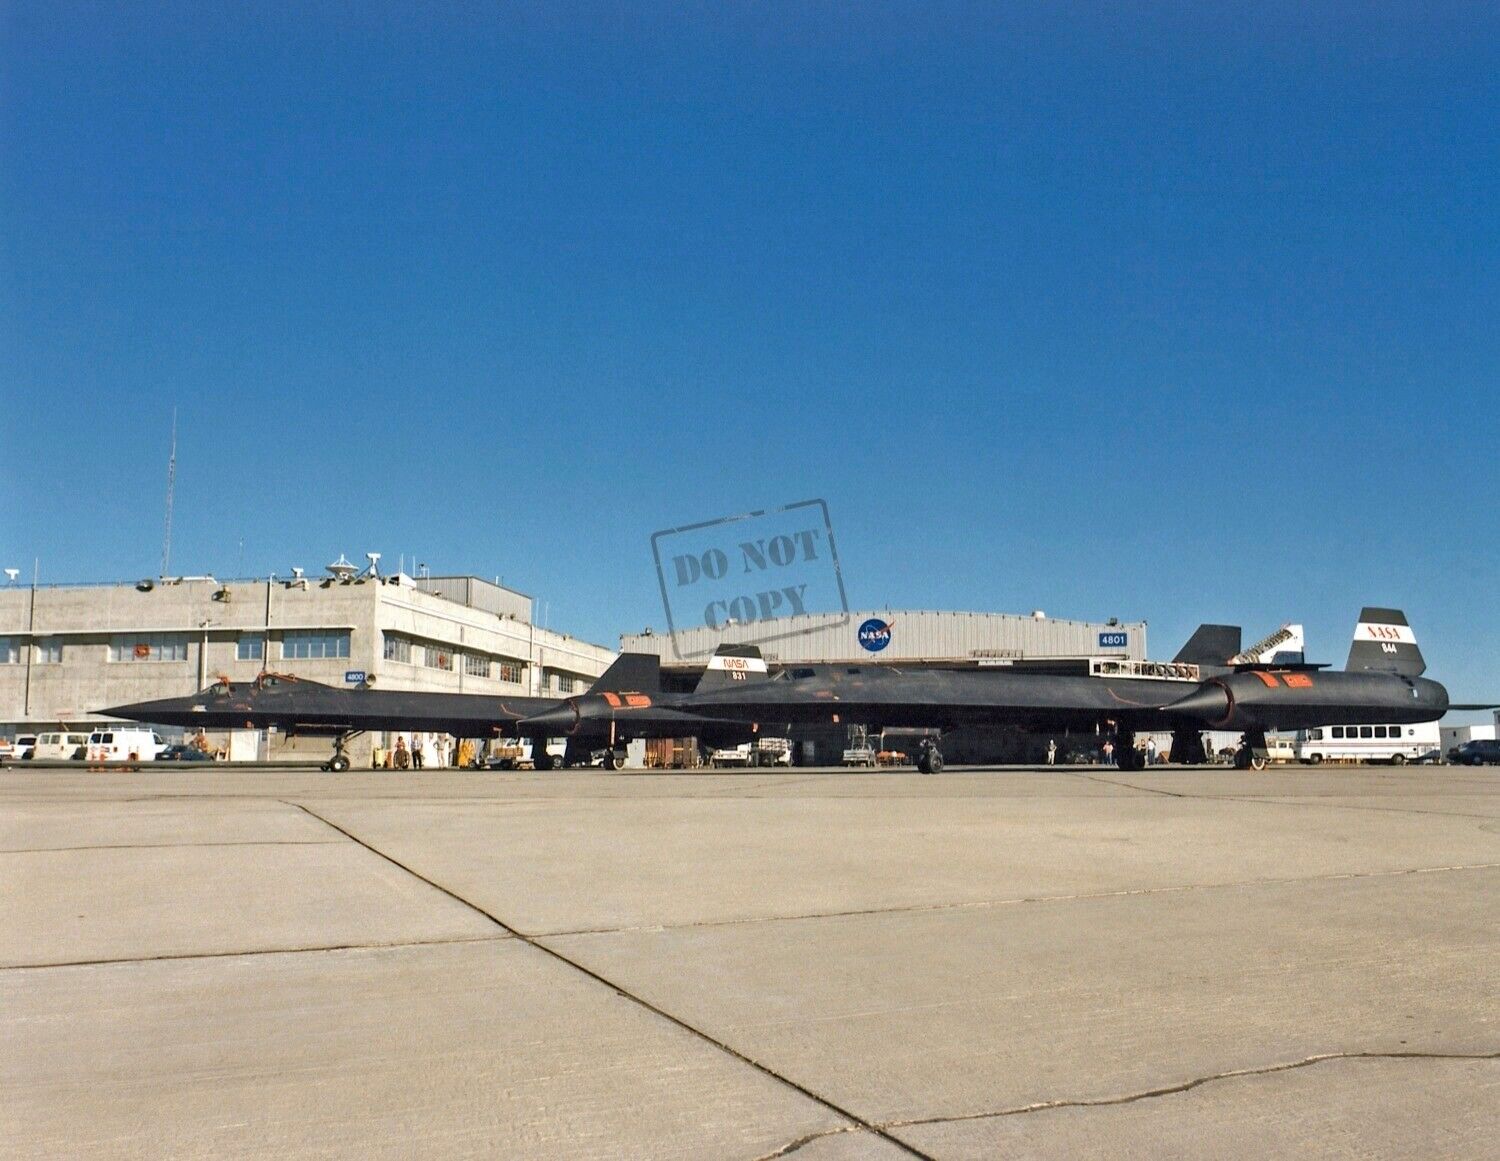 SR-71A linear aerospike experiment SR-71B trainer aircraft 12X18 Photo NASA D